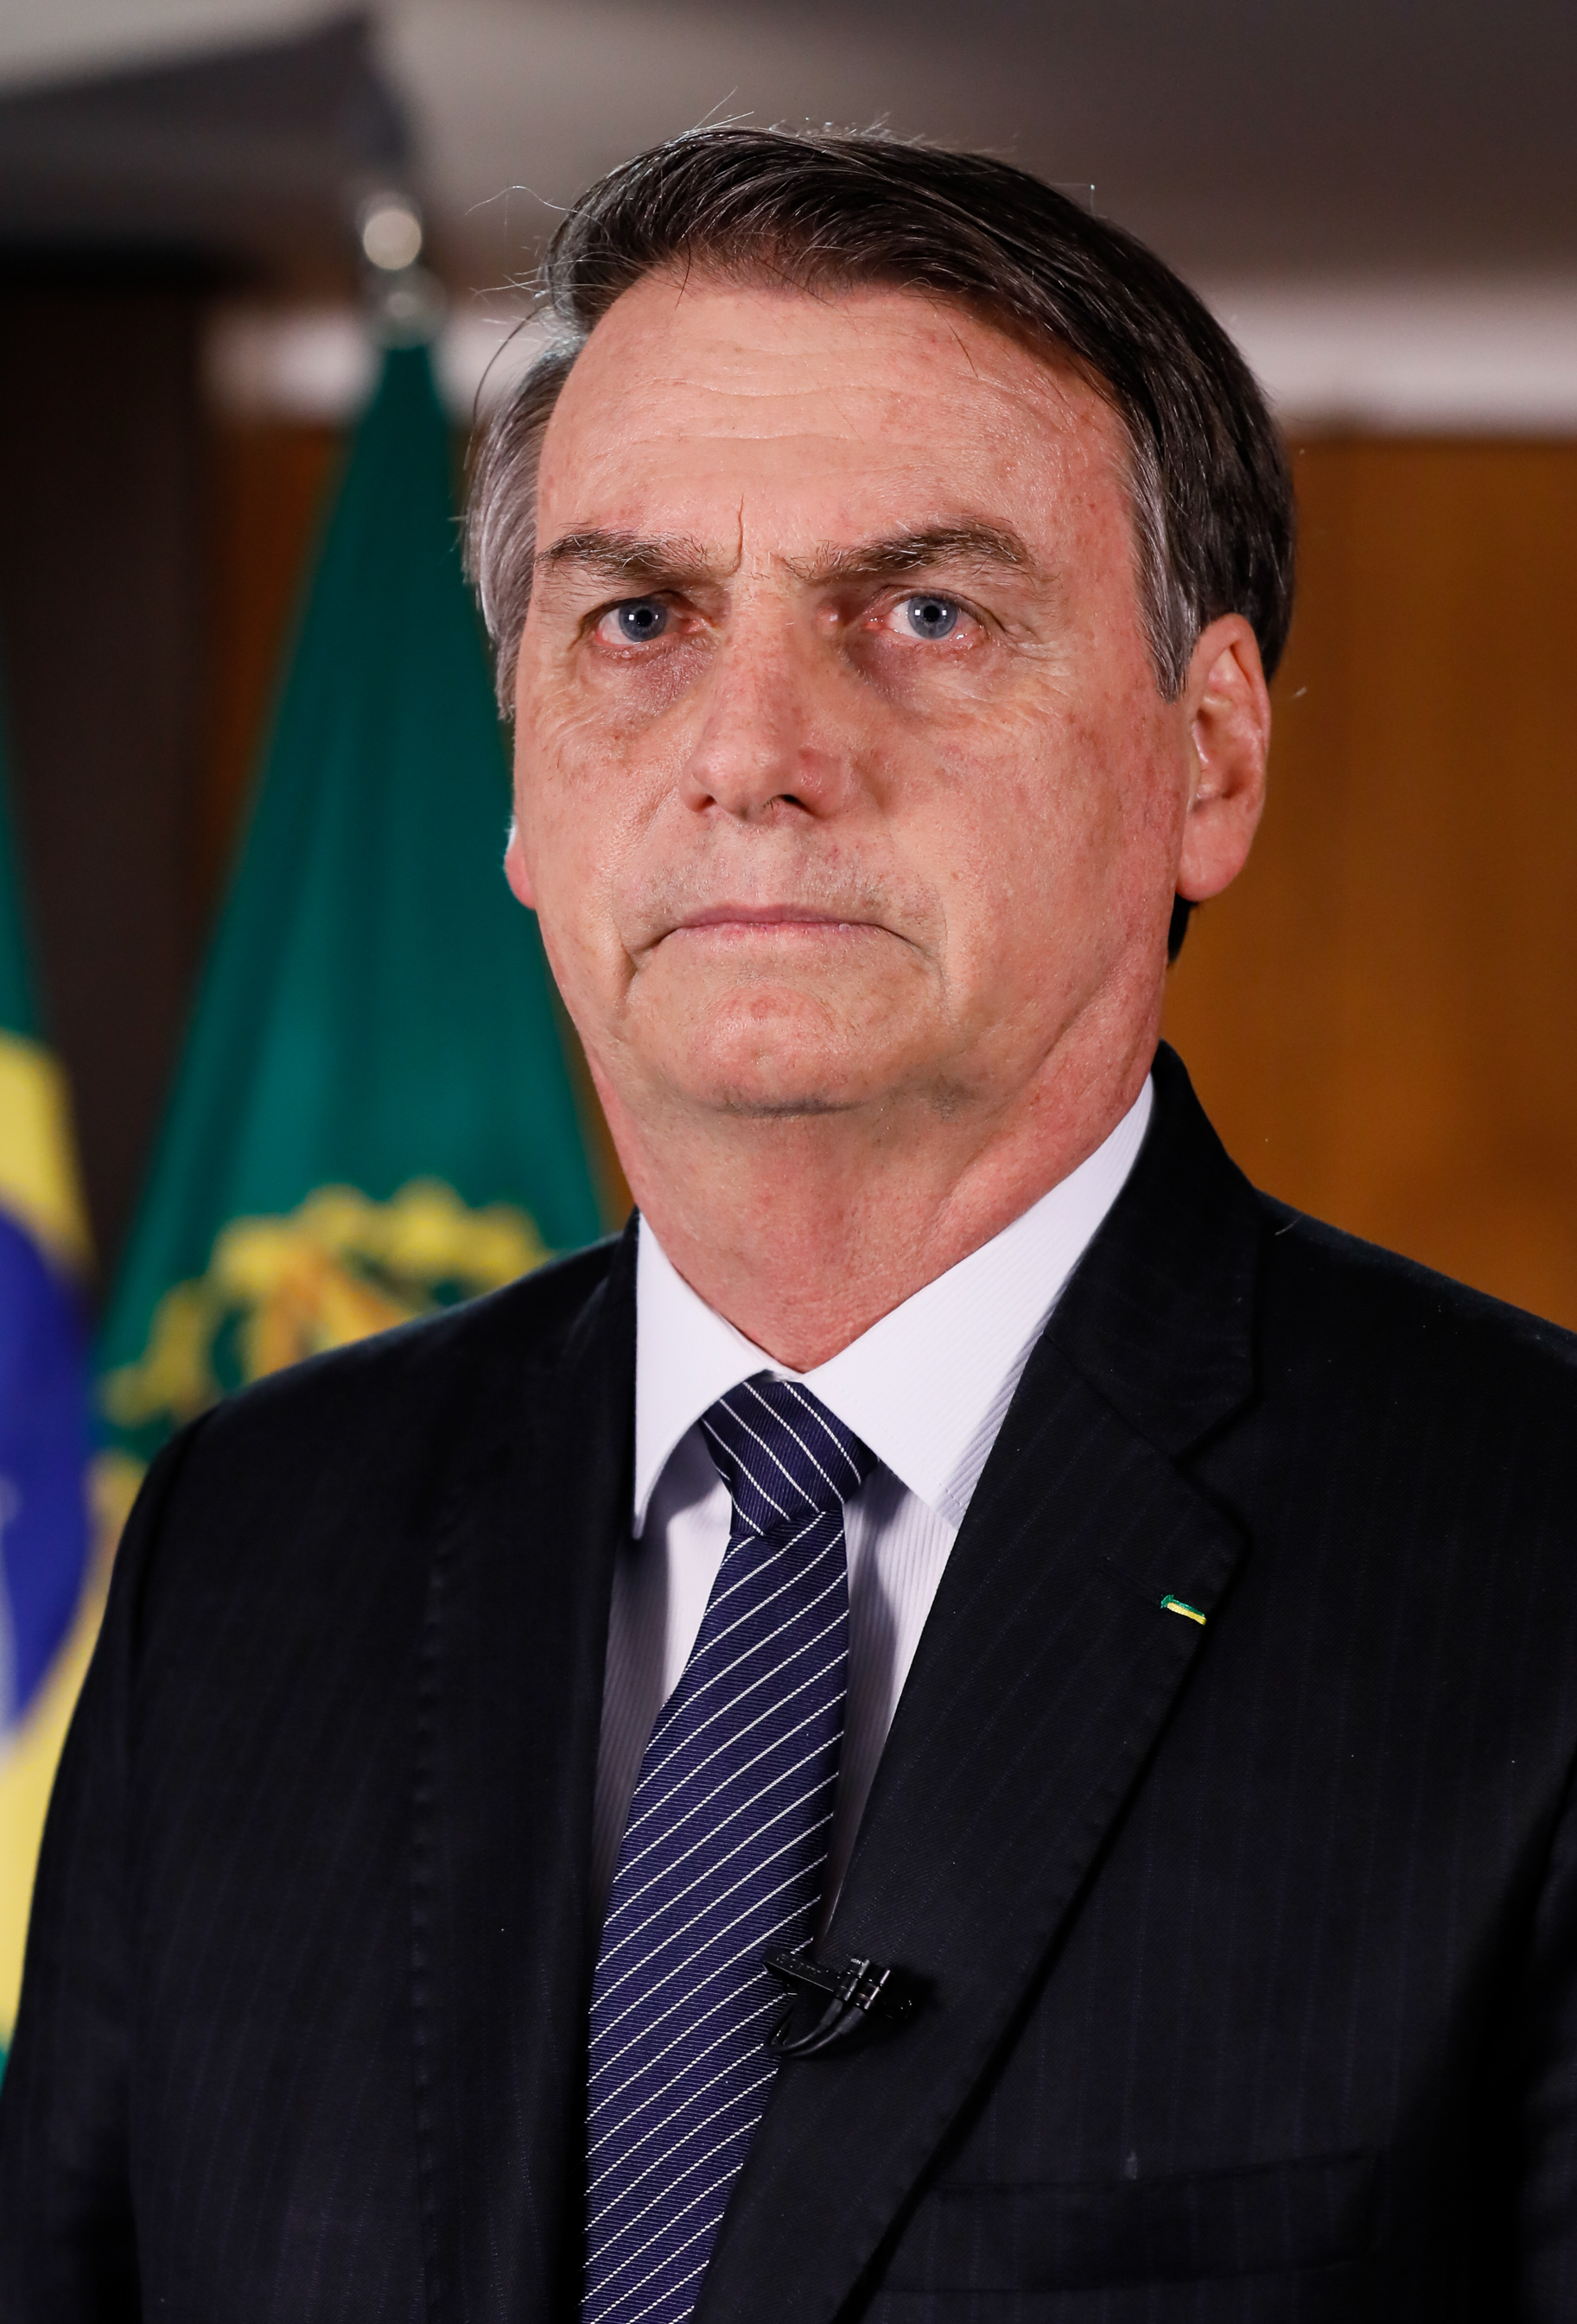 Jair Bolsonaro - Brazilian President